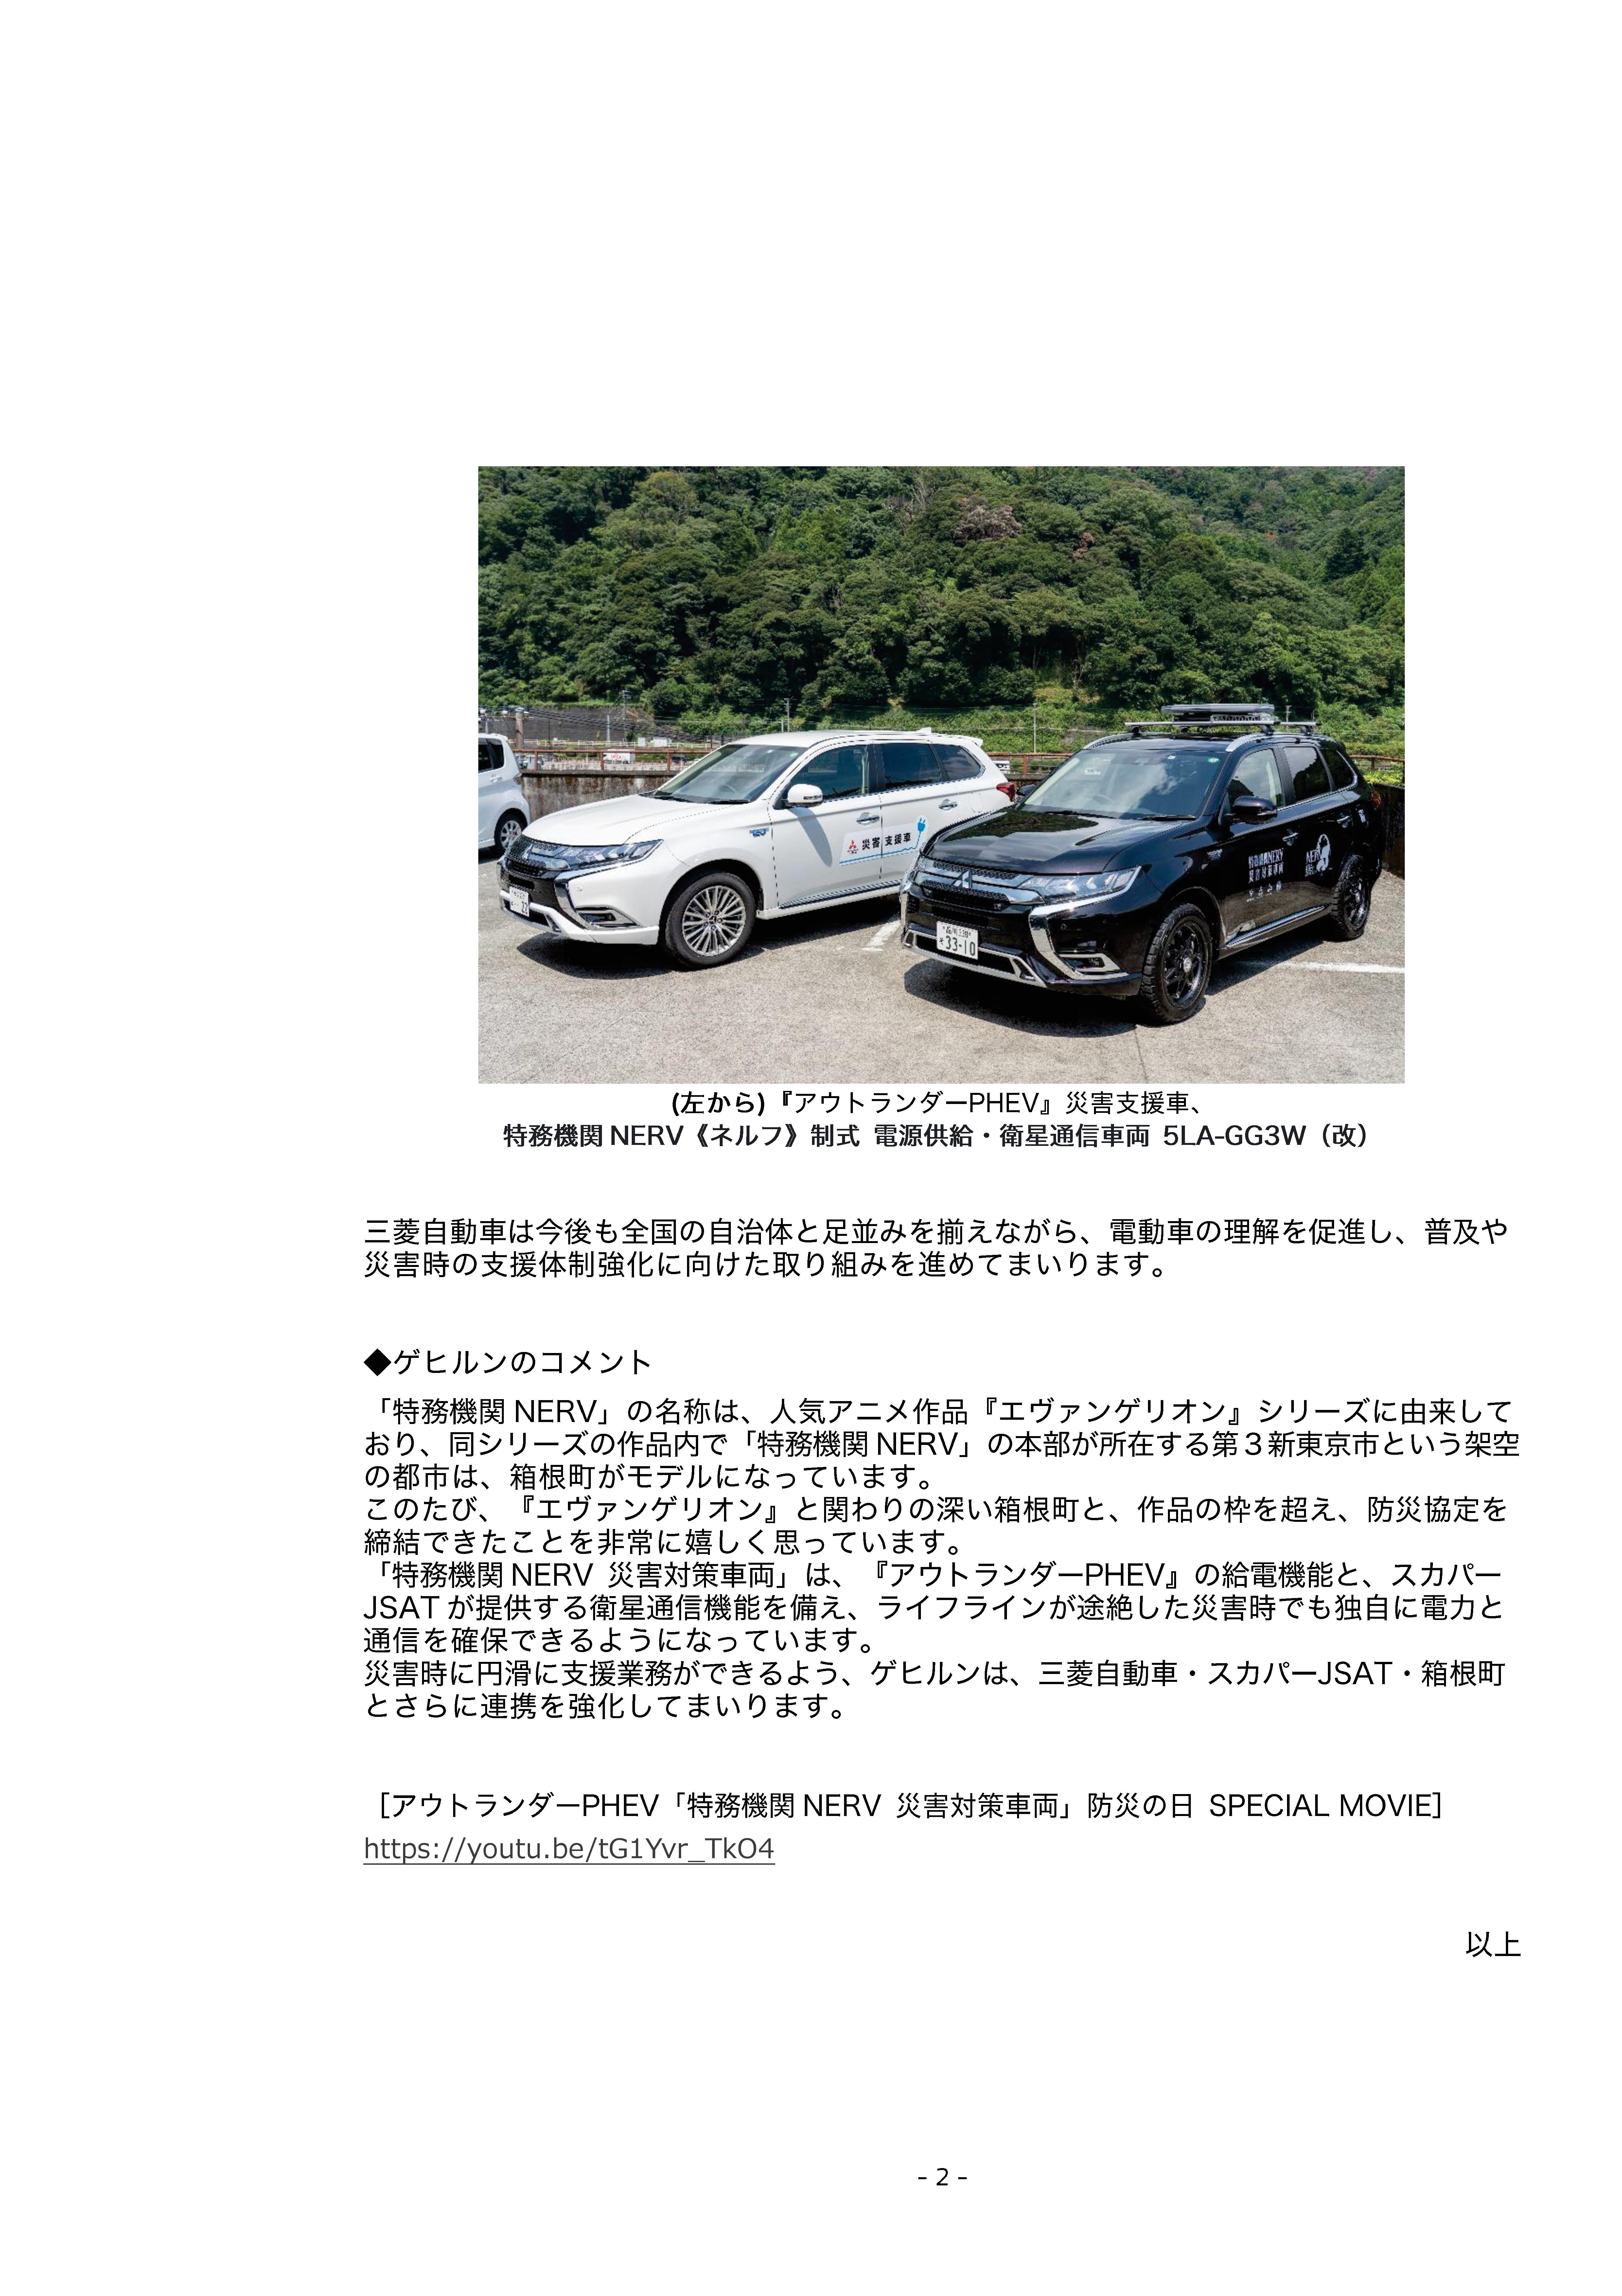 _jp_newsrelease_images_download_pdf_c_200901_p_5461.jpg